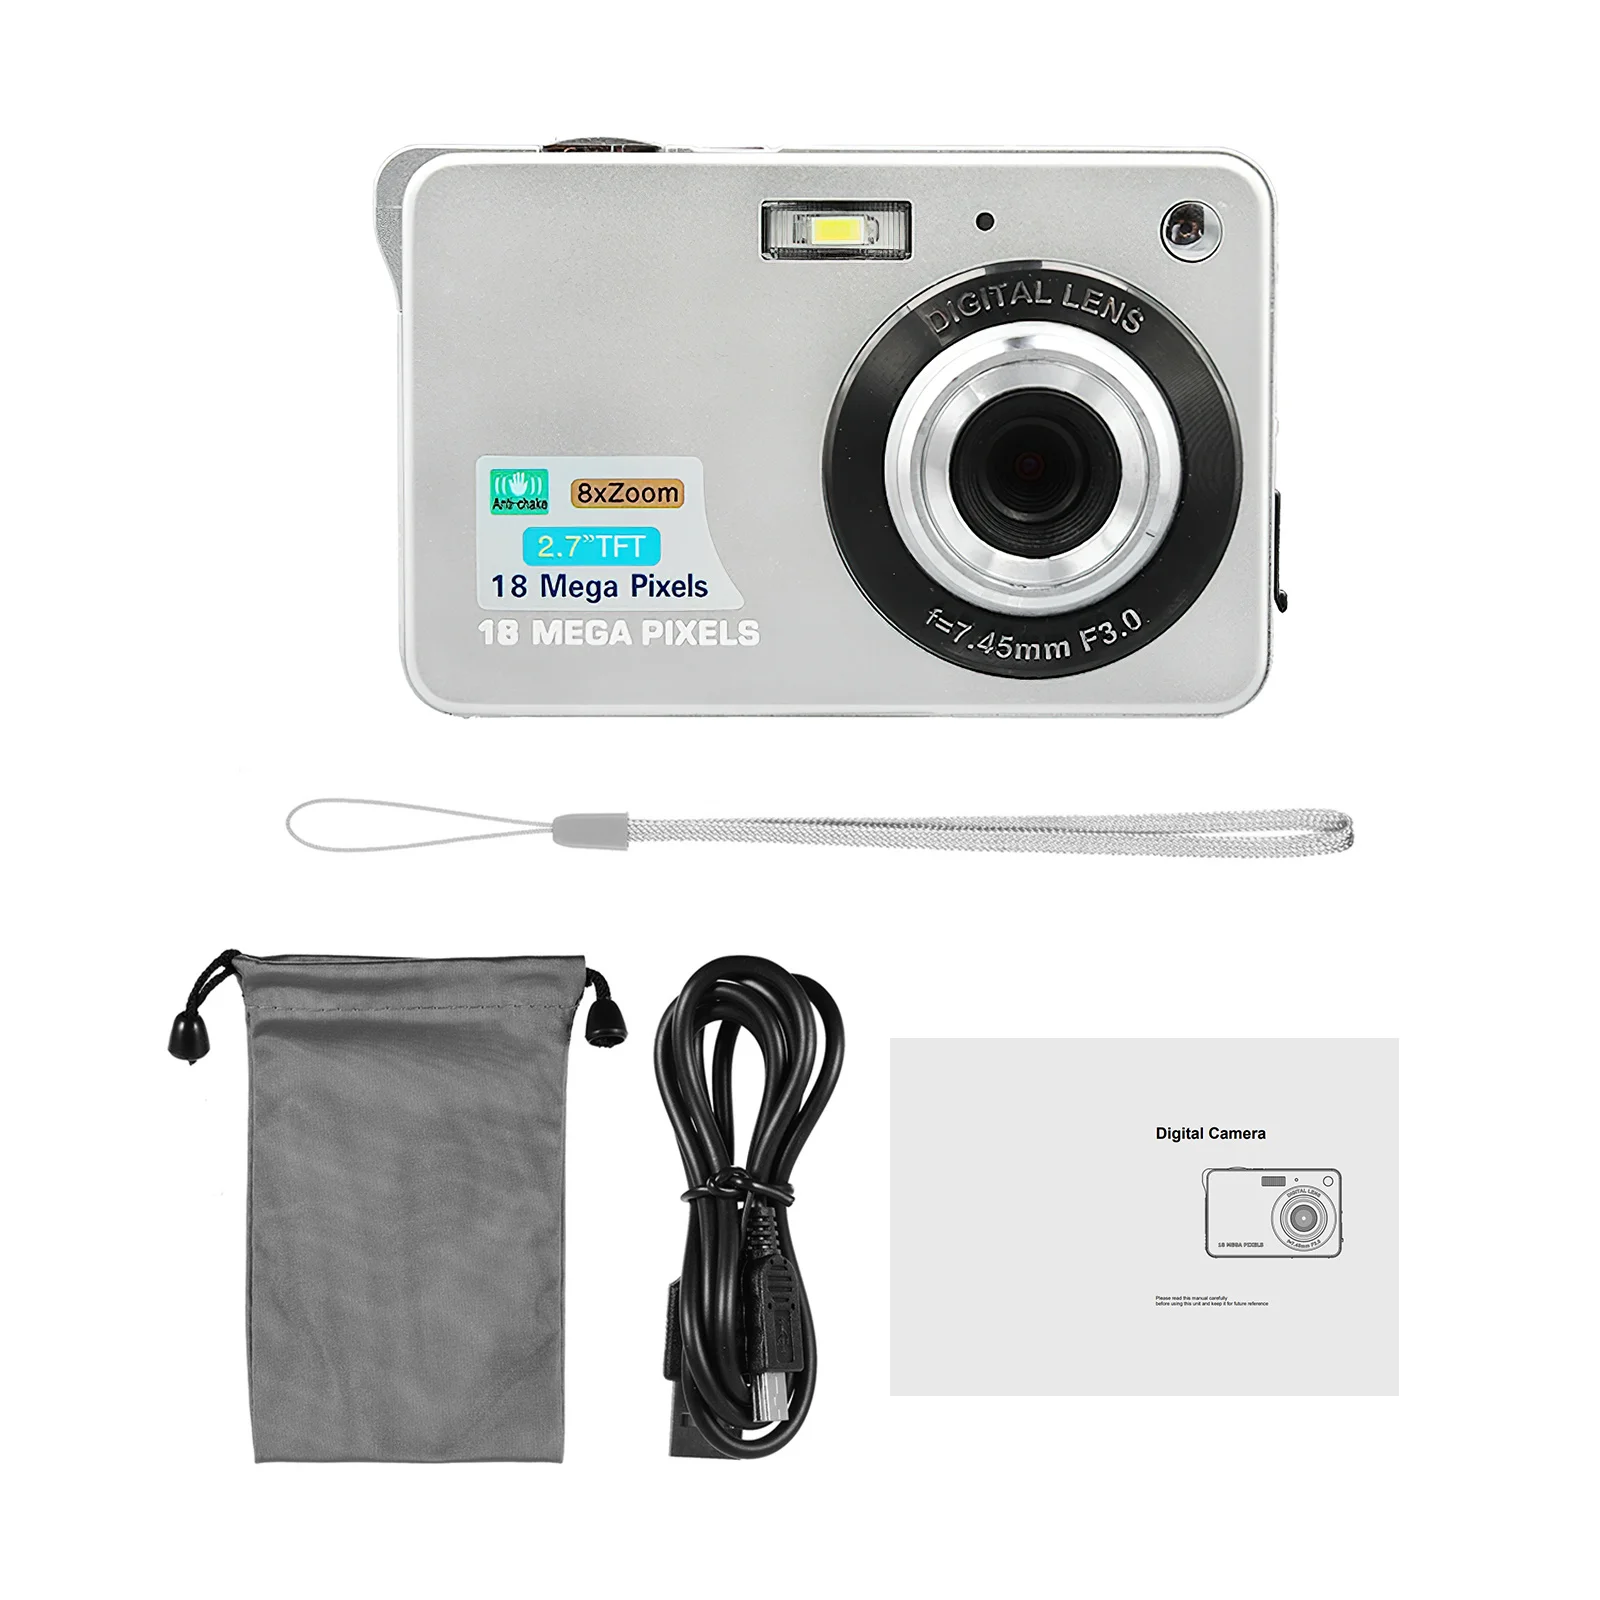 HD Digital Camera Video Camcorder 18MP Photo 8X Zoom Anti-shake 2.7